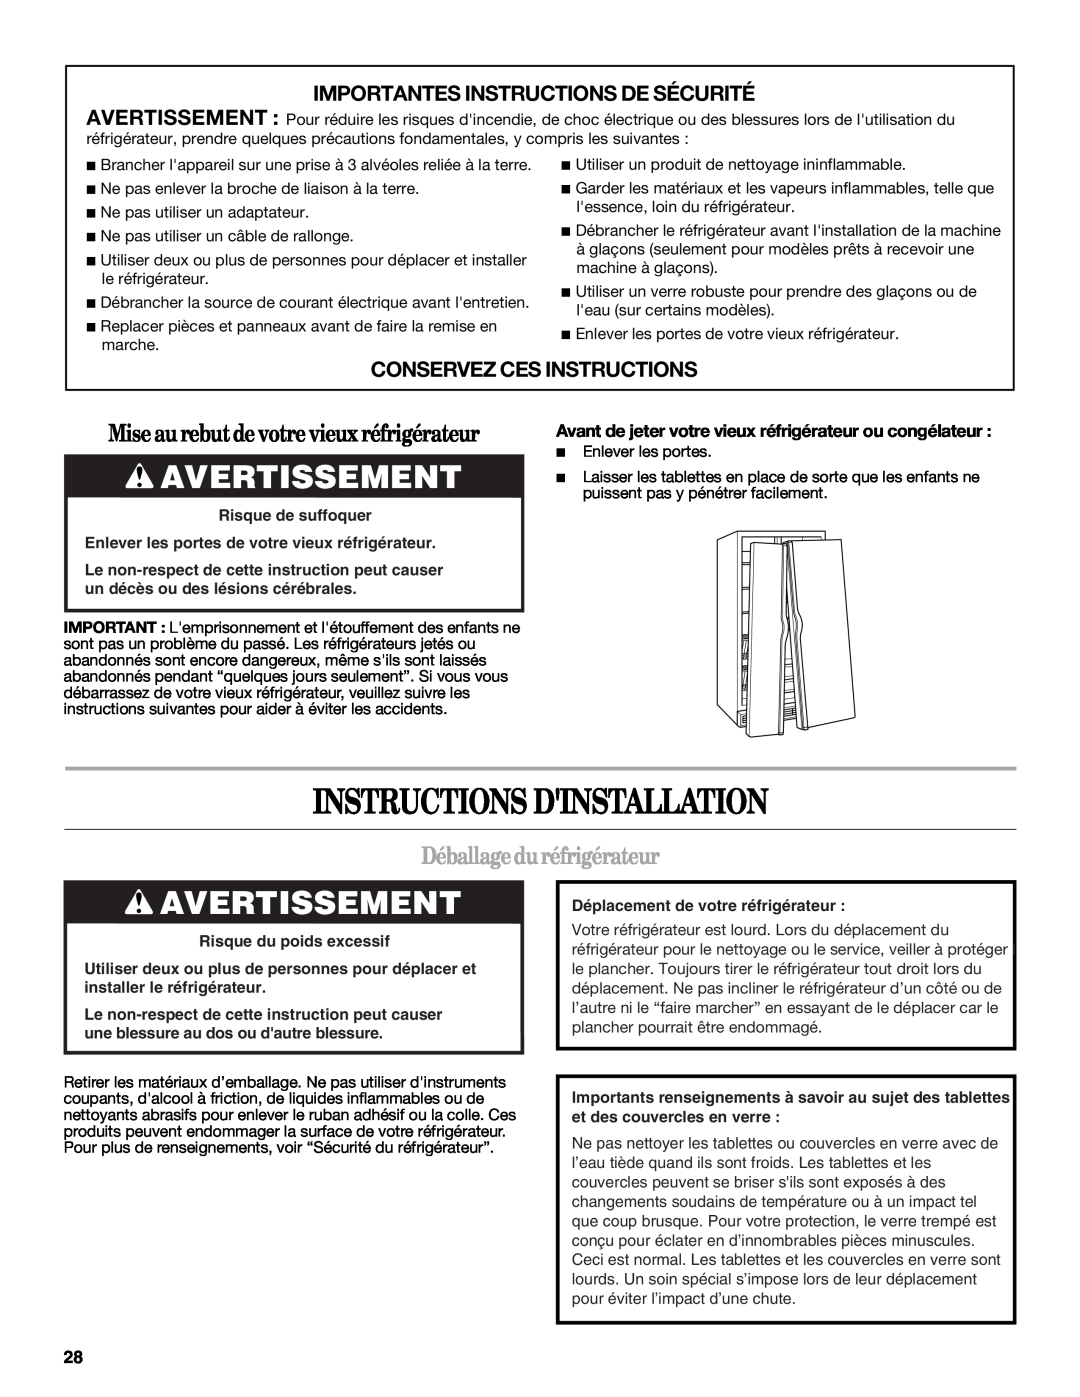 Whirlpool ED5VHGXML11, ED2PHEXNQ00 warranty Instructions Dinstallation, Avertissement, Miseau rebutdevotrevieuxréfrigérateur 